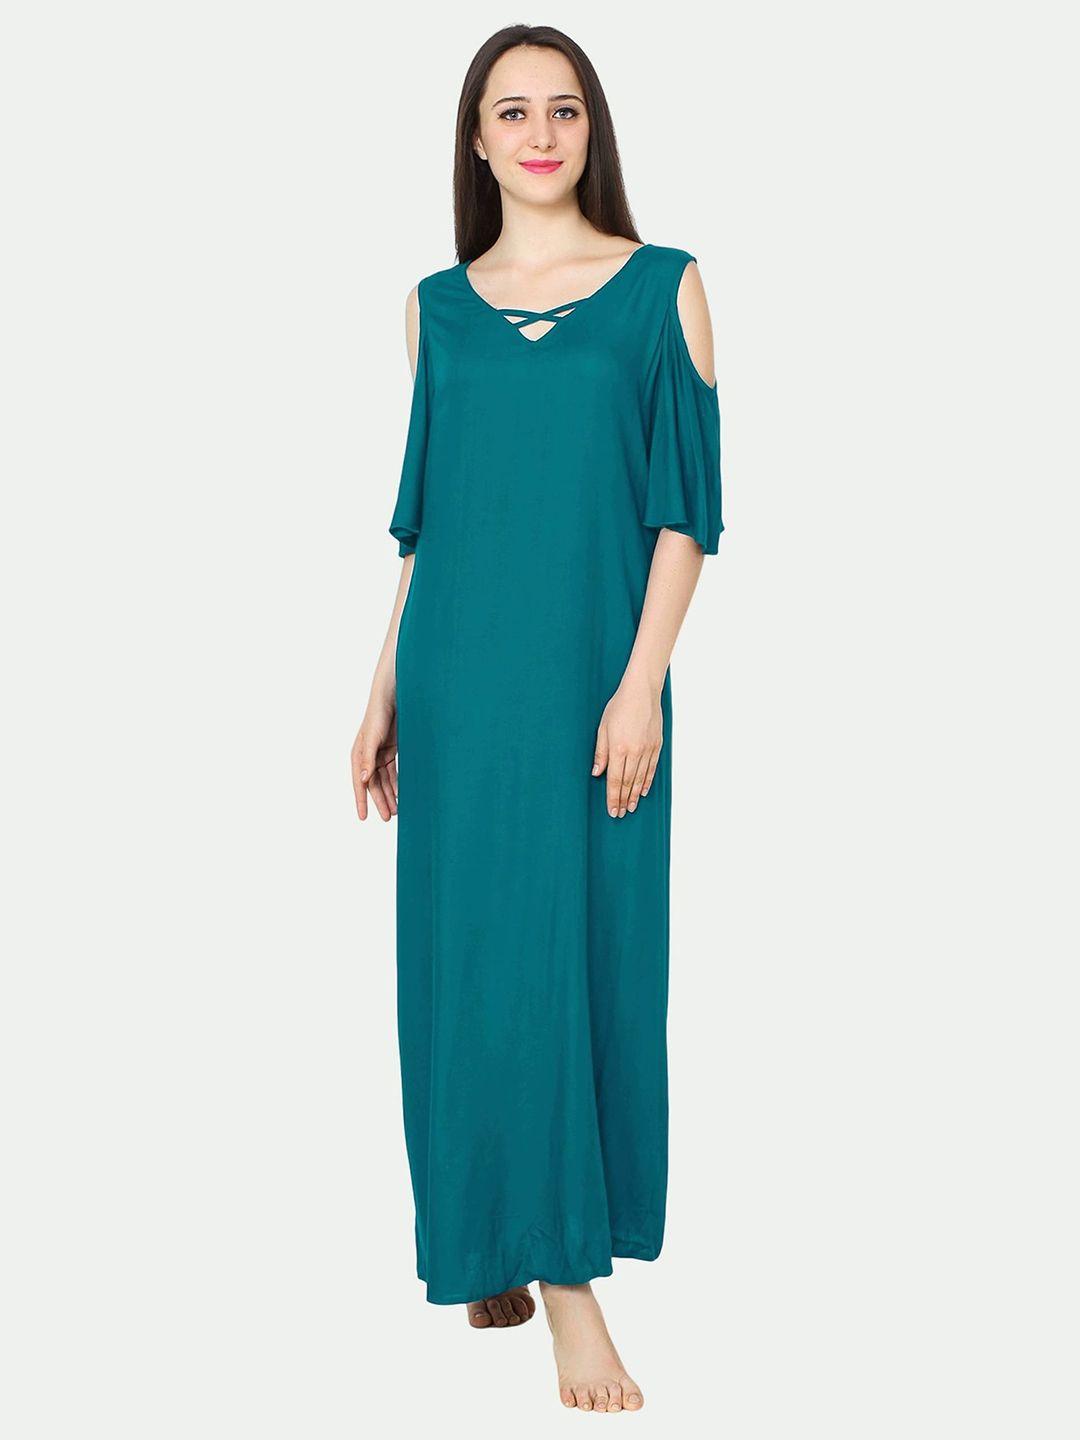 patrorna women solid v-neck cotton blend maxi dress